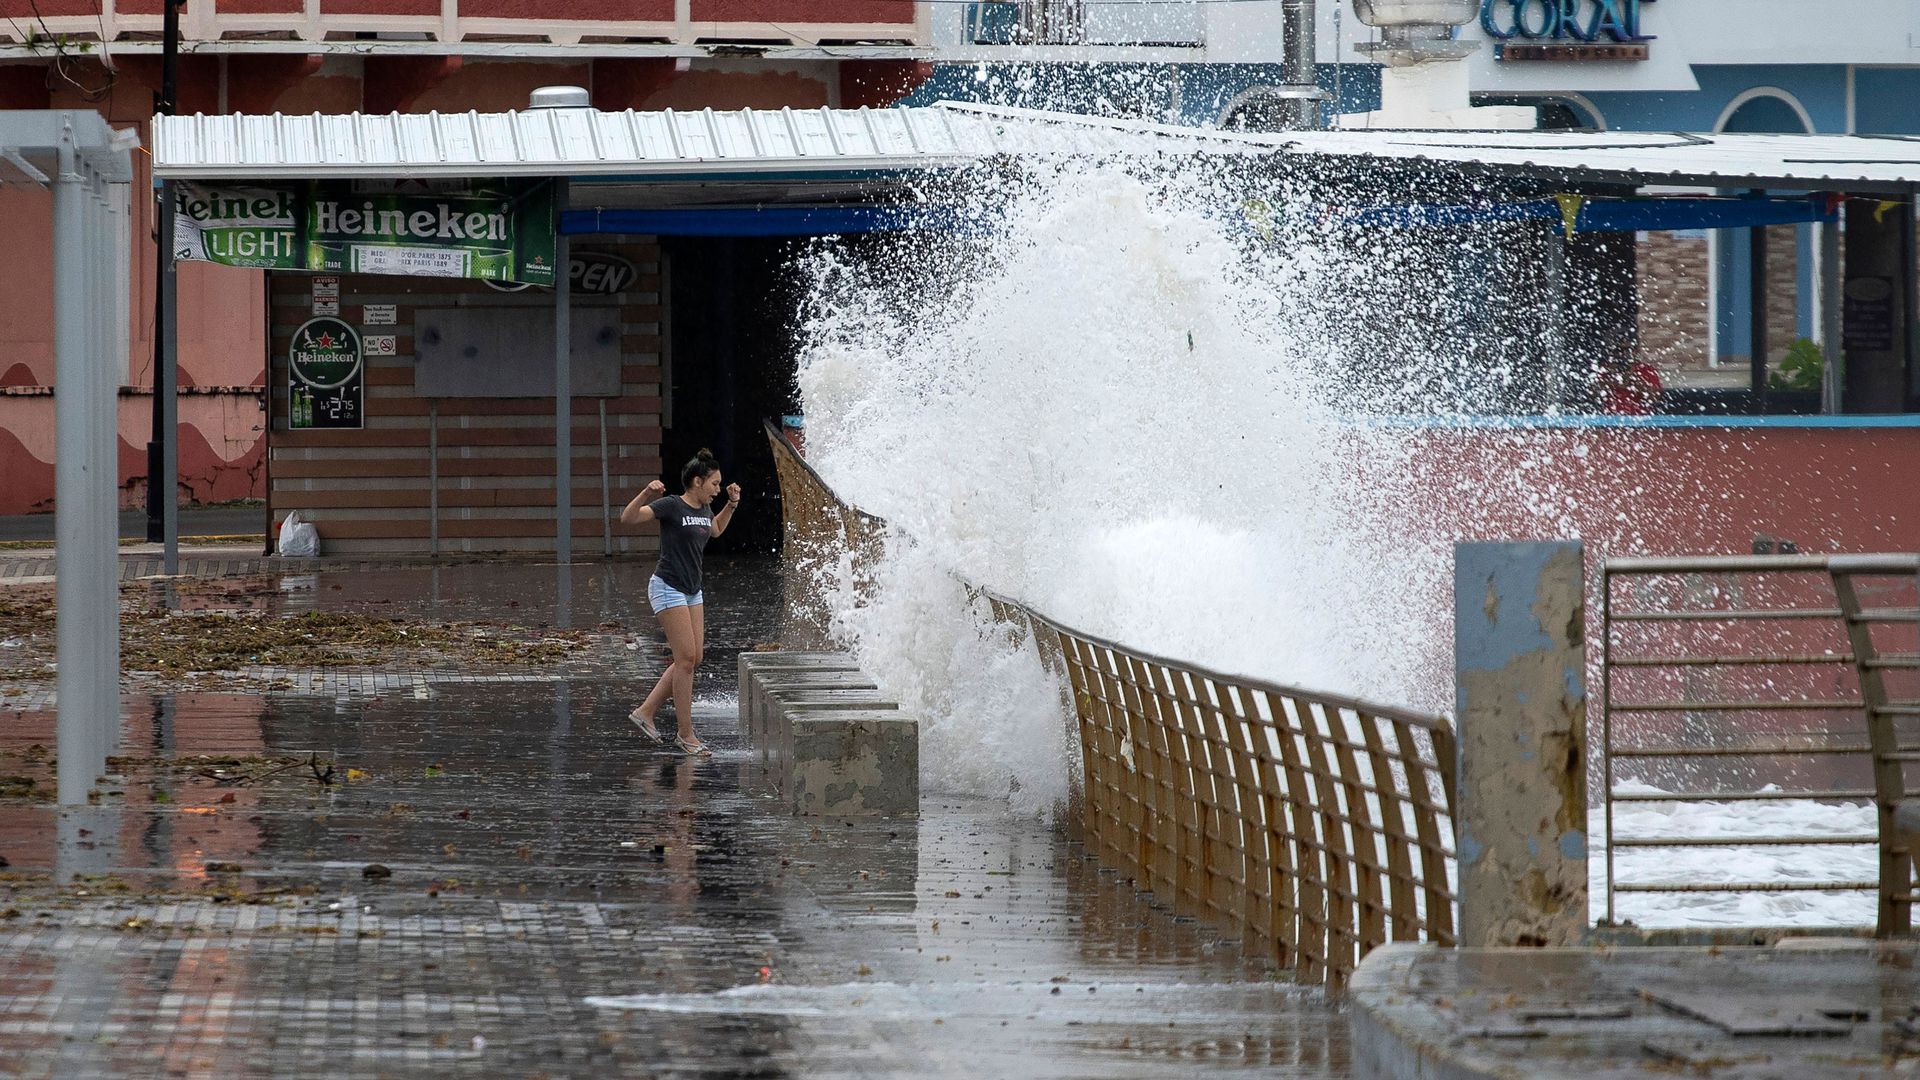  A woman walks next to the coast as tropical Storm Karen approaches in Naguabo, Puerto Rico, on September 24